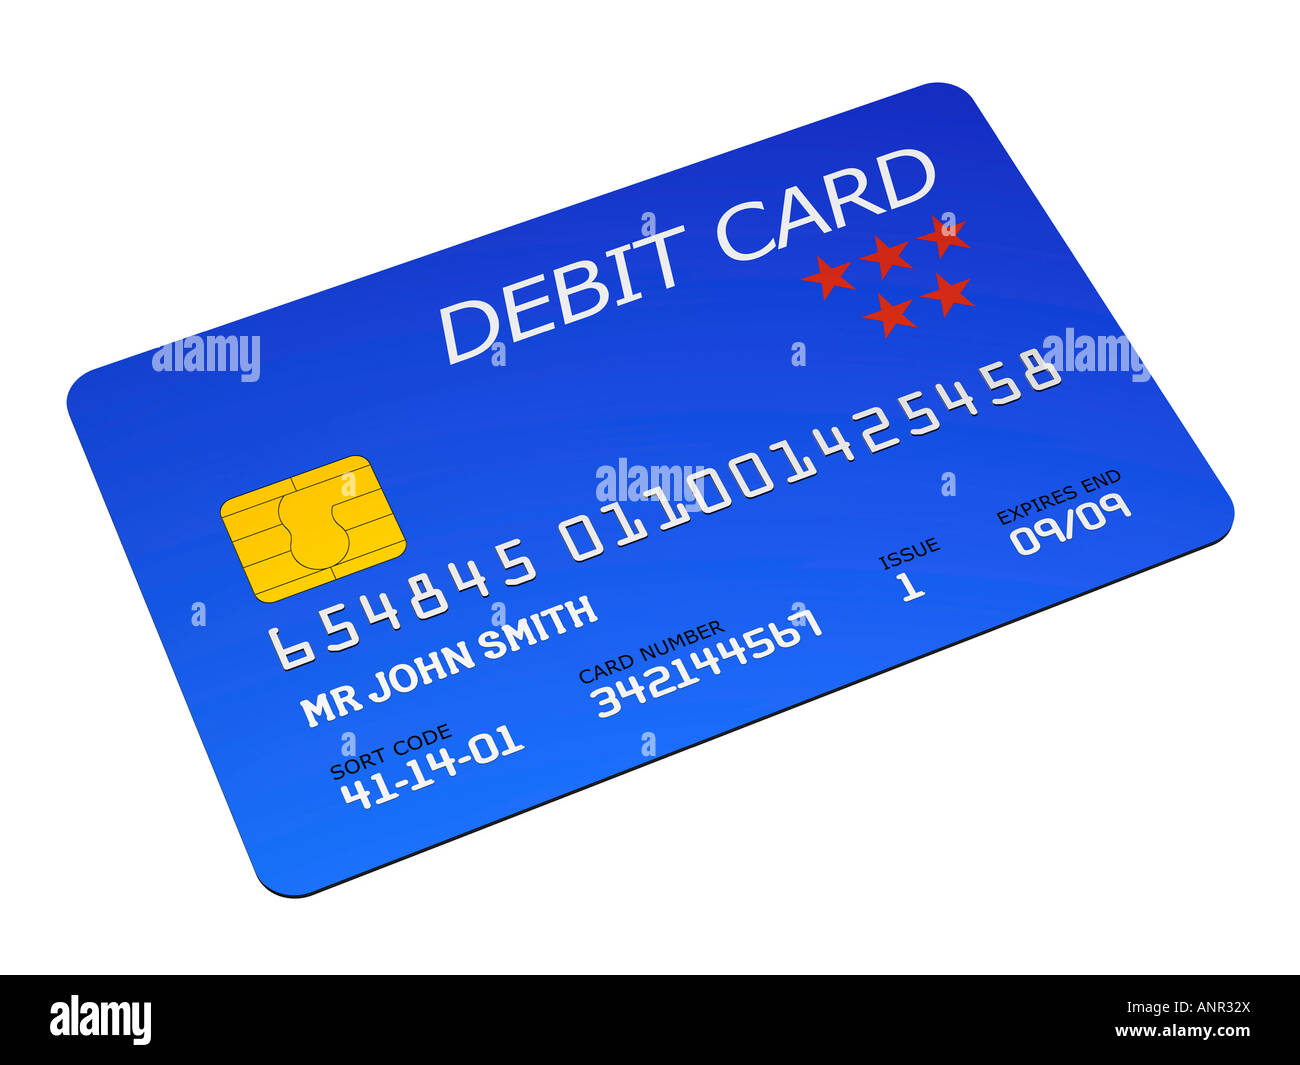 Generic chip pin debit card Stock Photo - Alamy